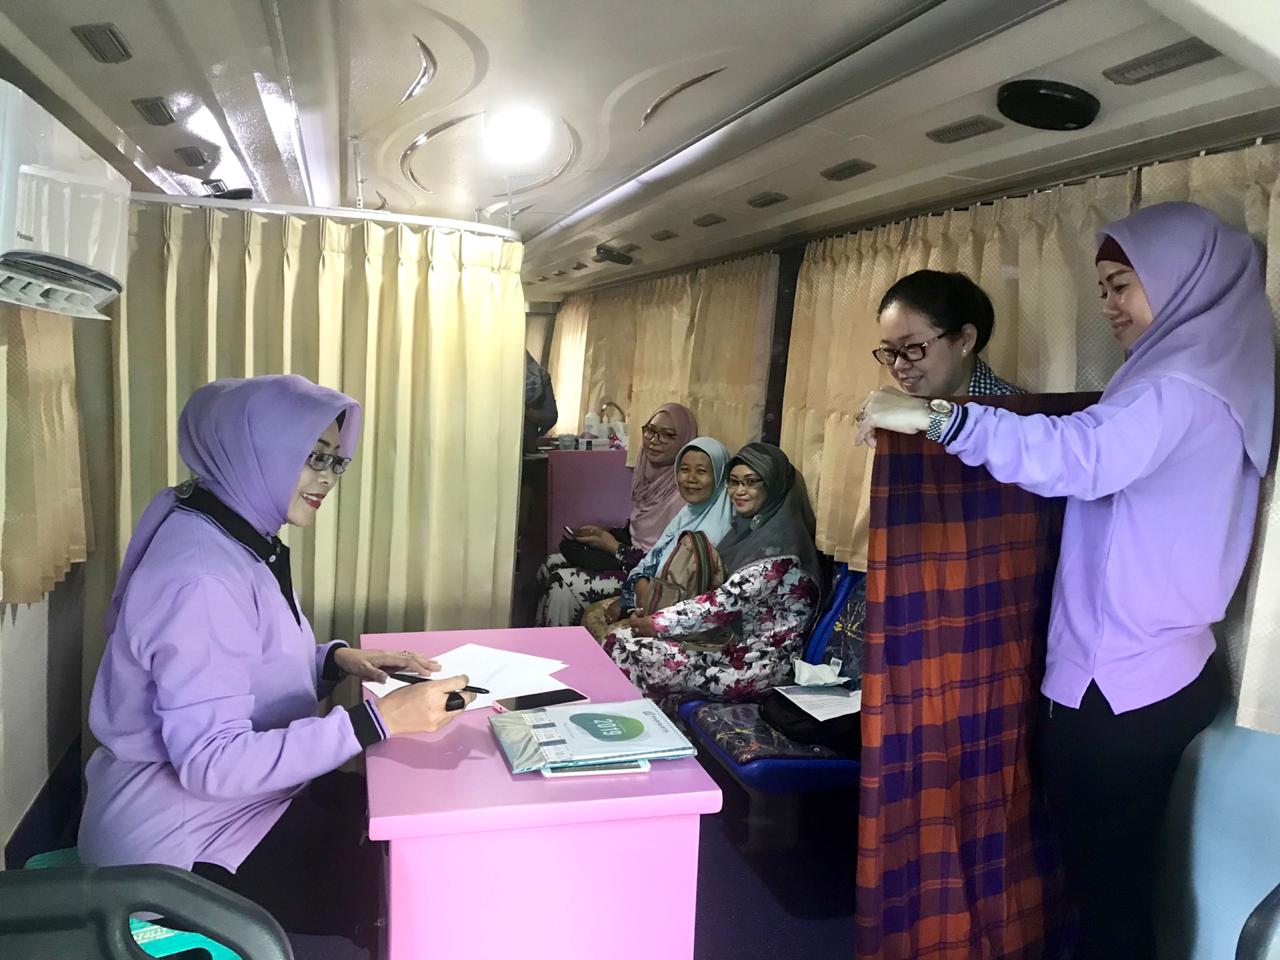 Pendiri Fatma Foundation, Fatma Saifullah Yusuf (kiri) saat pemeriksaan papsmear di dalam Bus Kesehatan, Minggu, 28 April 2019. (Foto: Fatma Foundation)